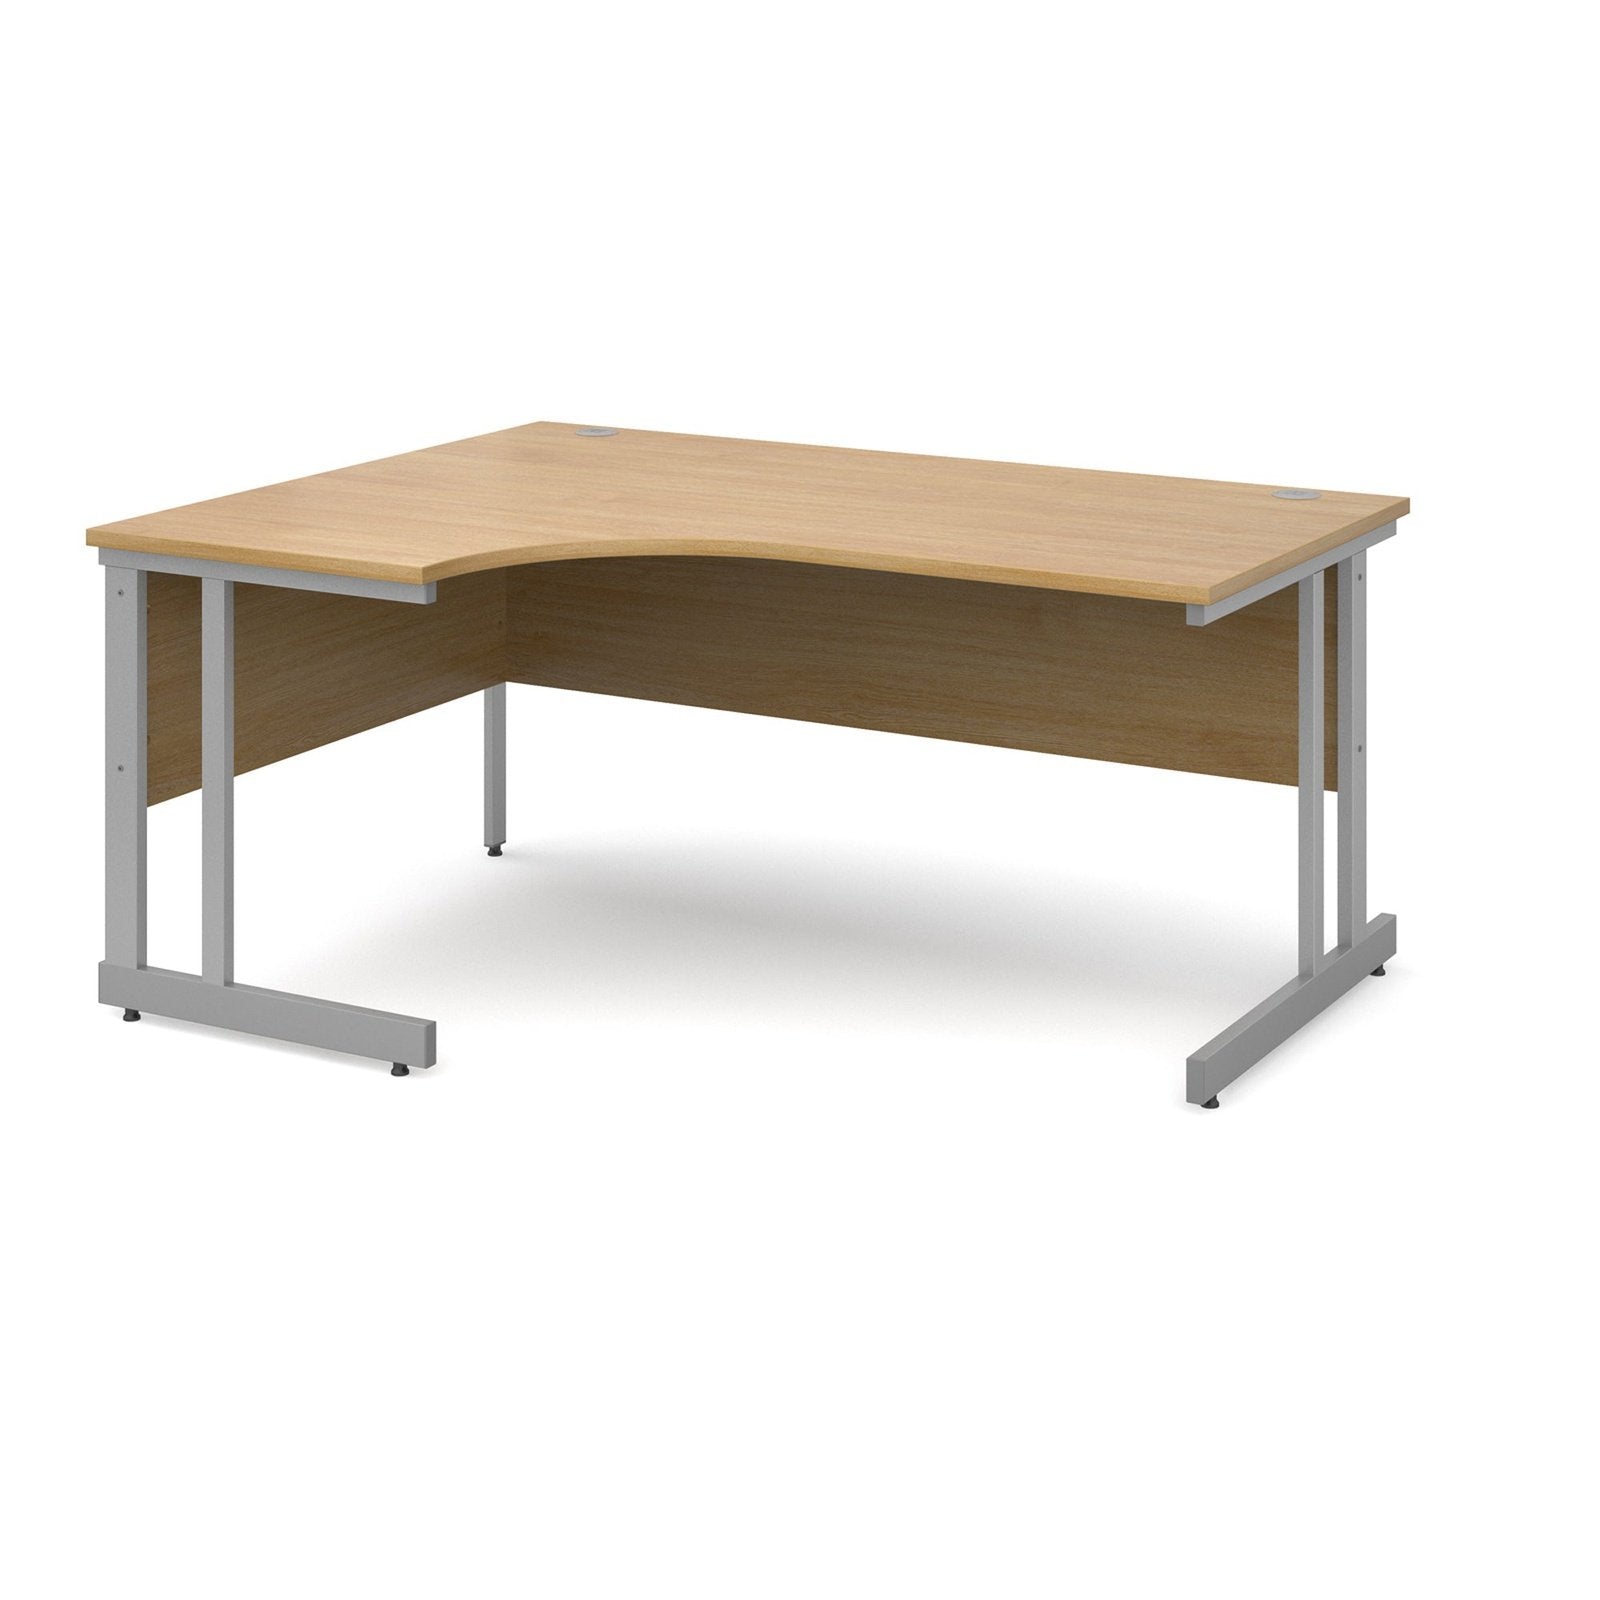 Momento cantilever leg left hand ergonomic desk - Office Products Online